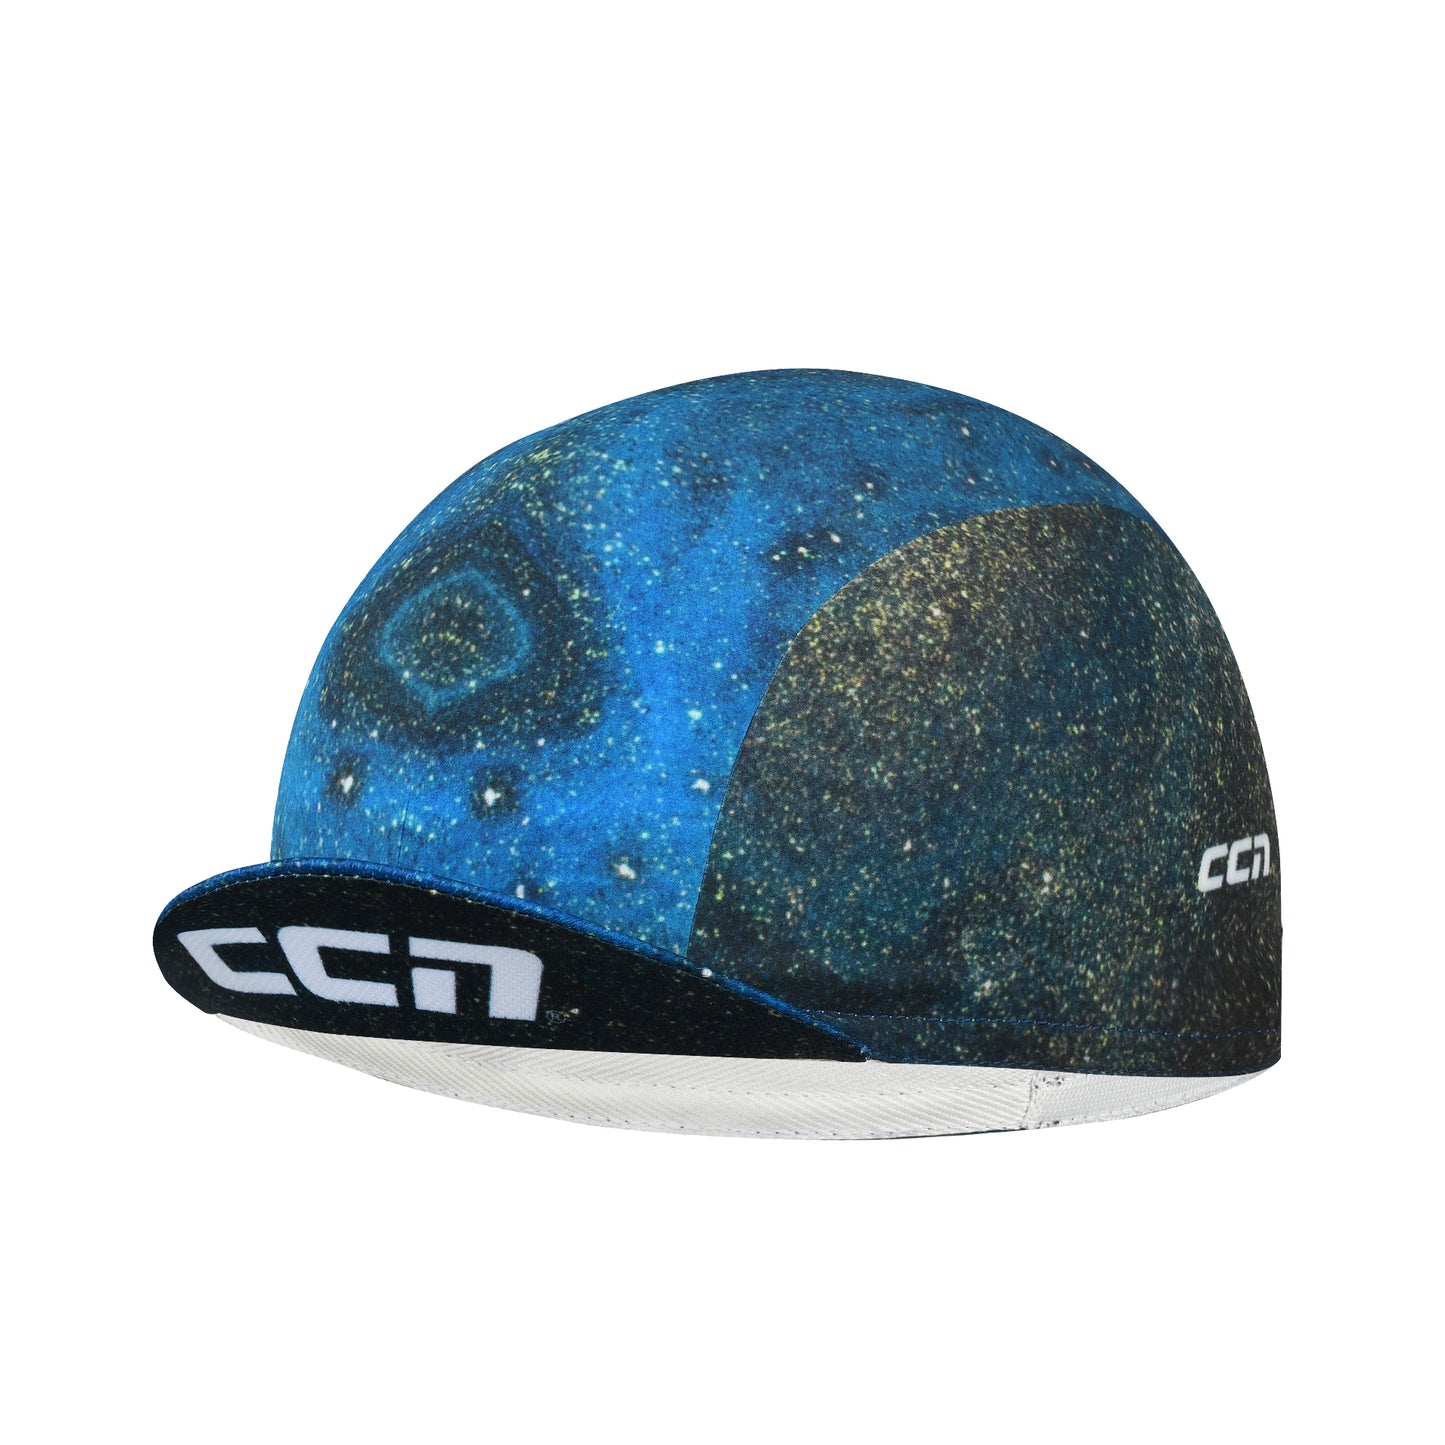 Aero Starry blue Cap